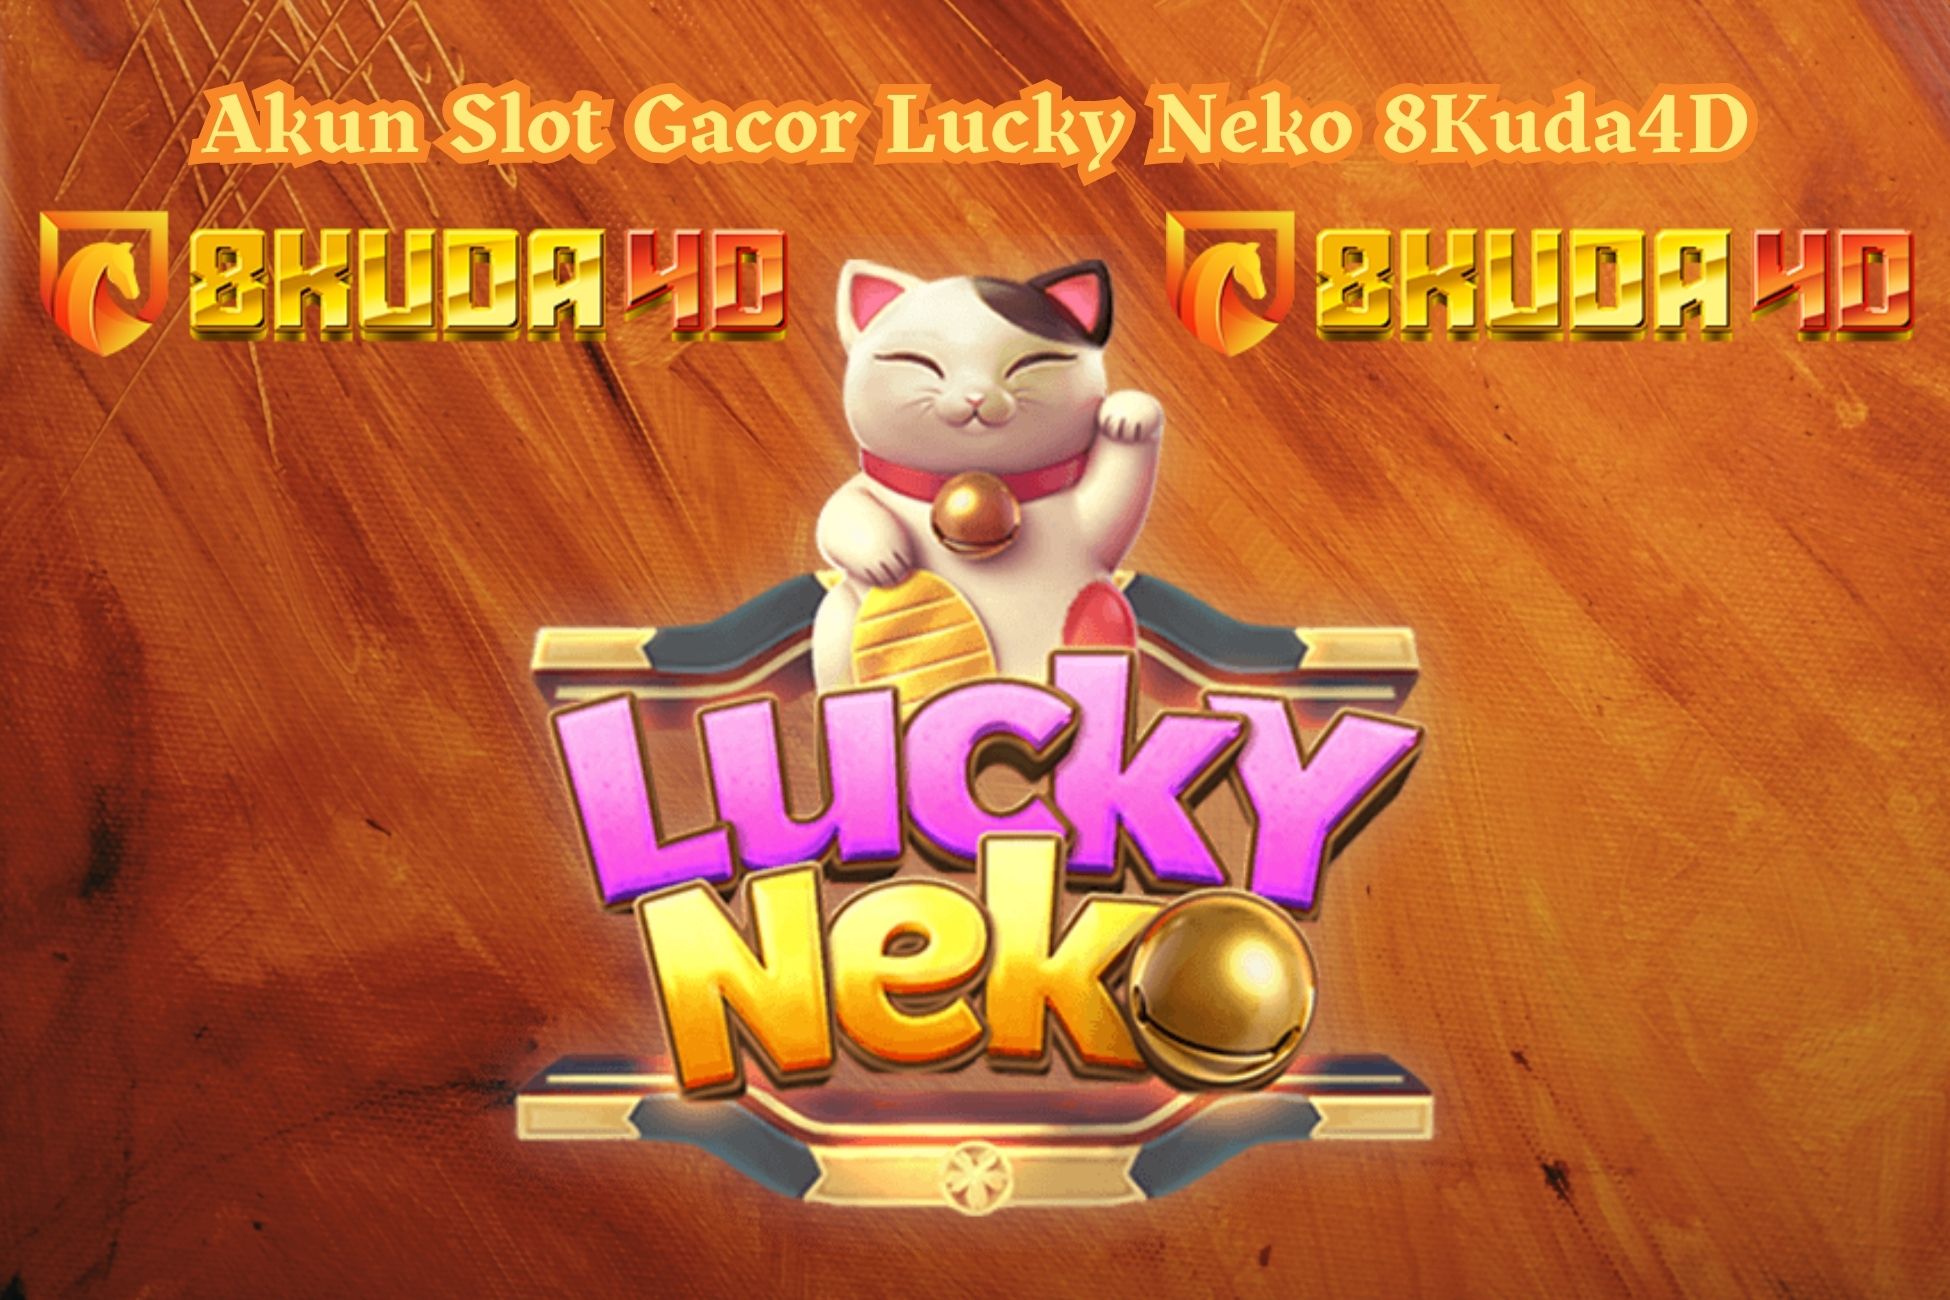 Akun Slot Gacor Lucky Neko 8Kuda4D